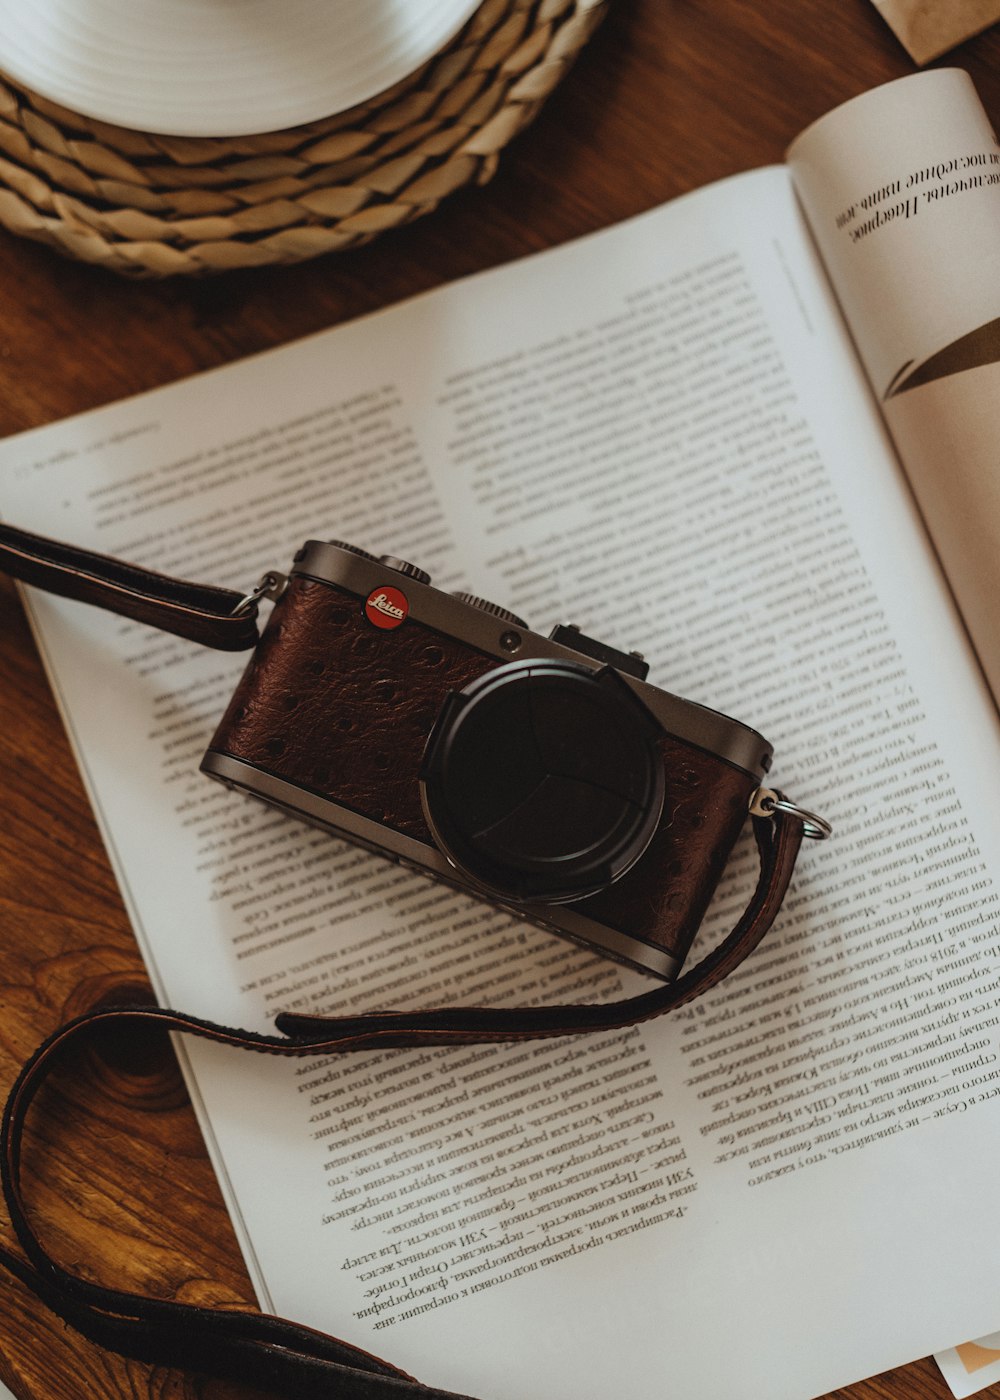 a camera on a book